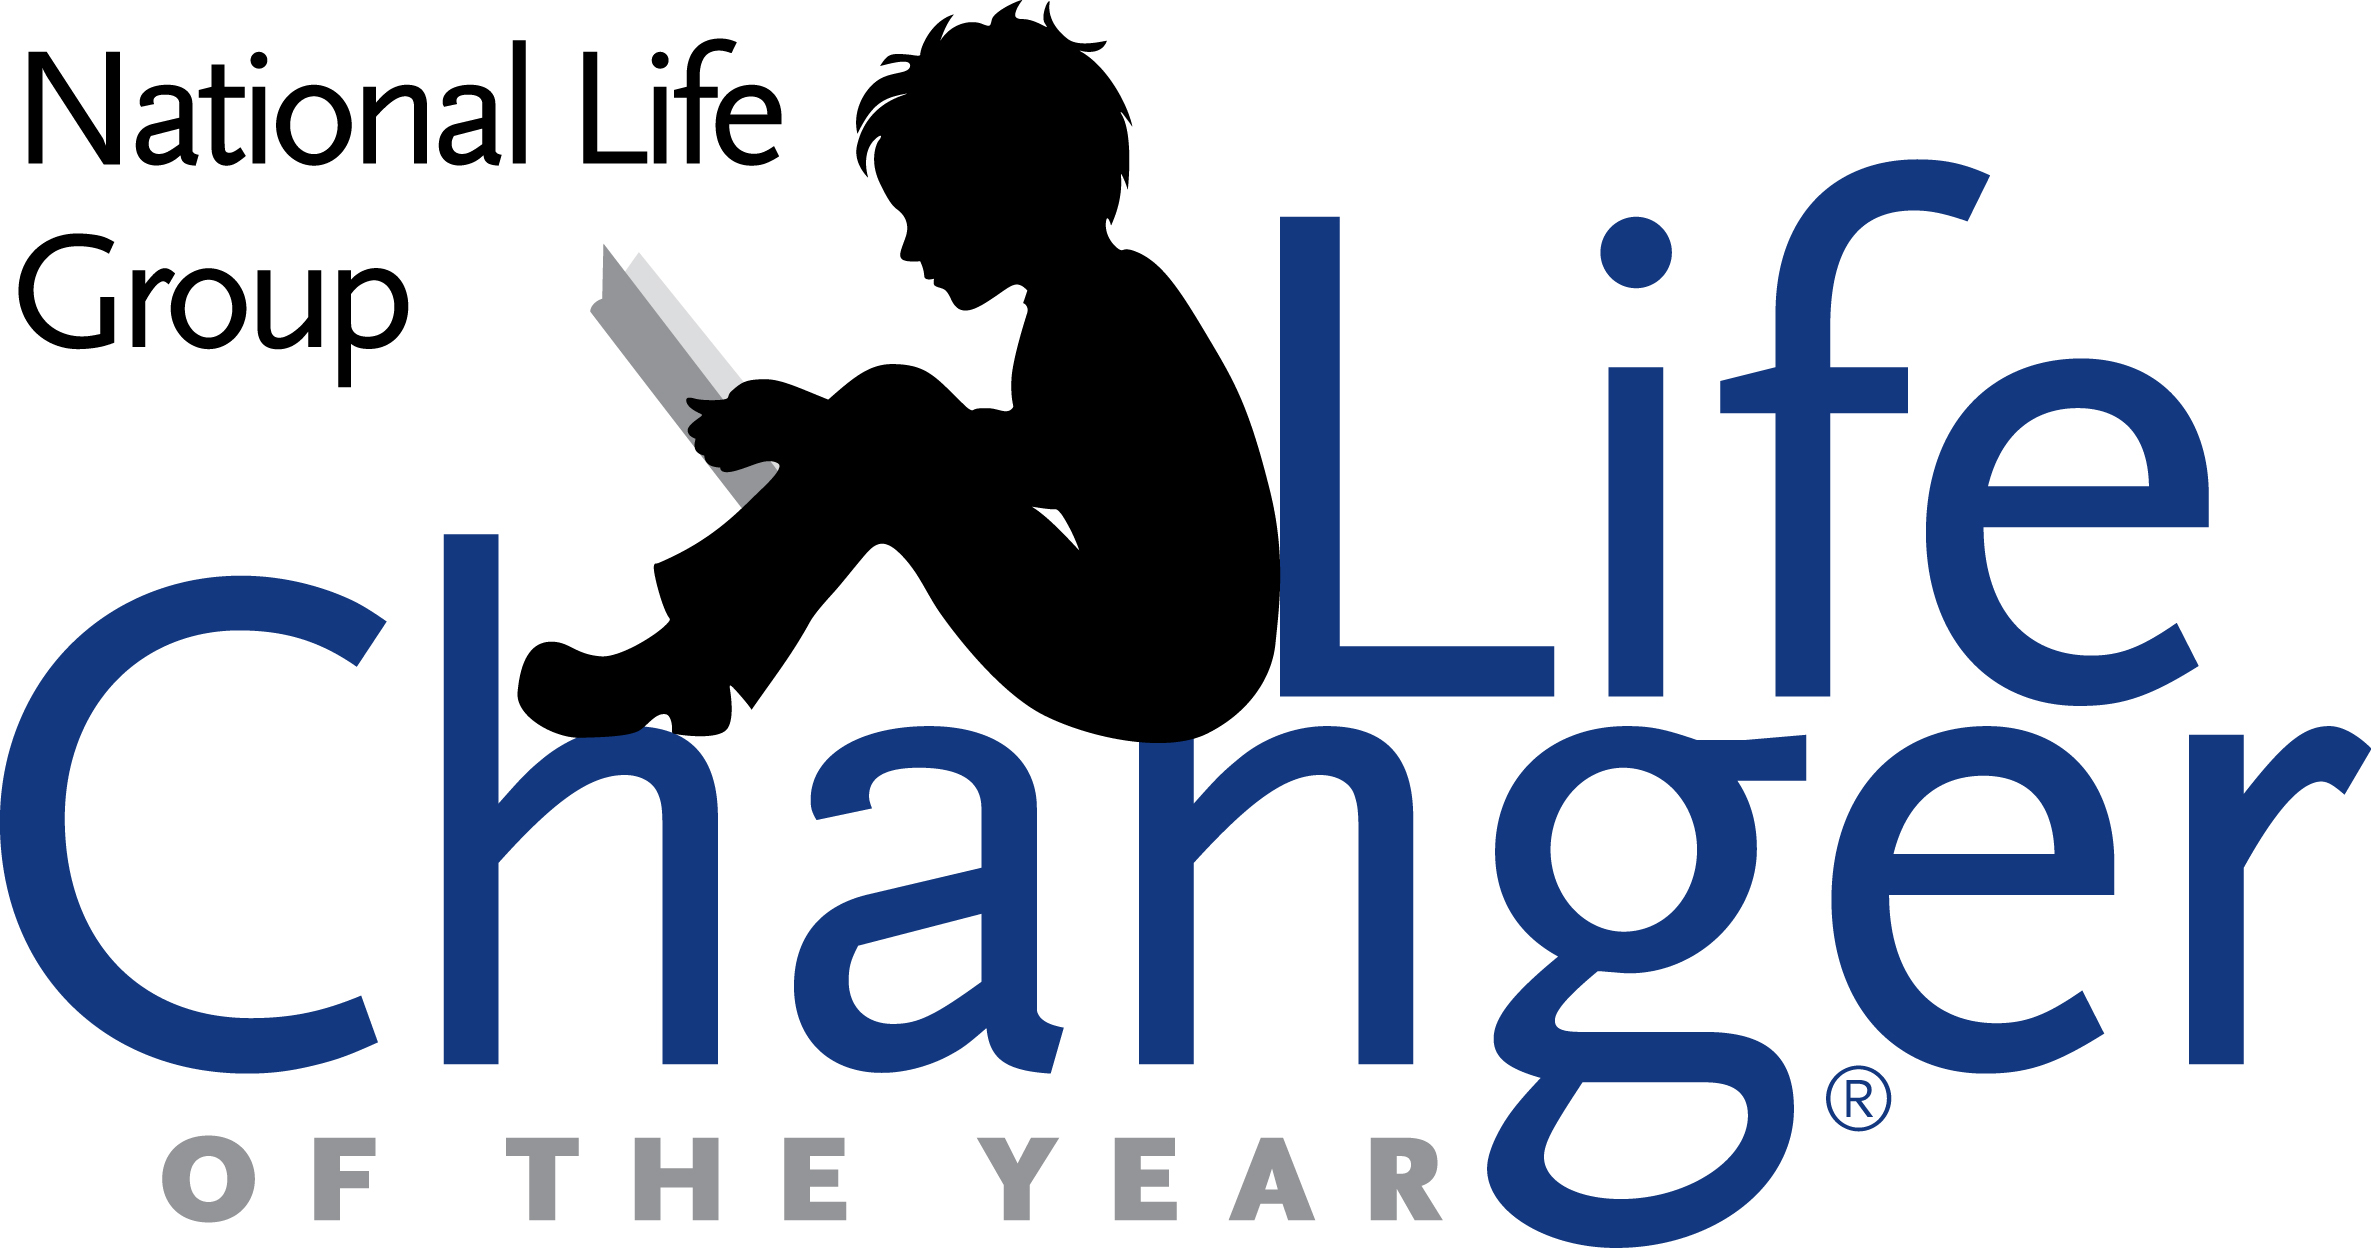 A life changing year. Логотип лайф групп. «Life Style» логотип Свободный. Vitrolife Group логотип. Национальный музей логотип.